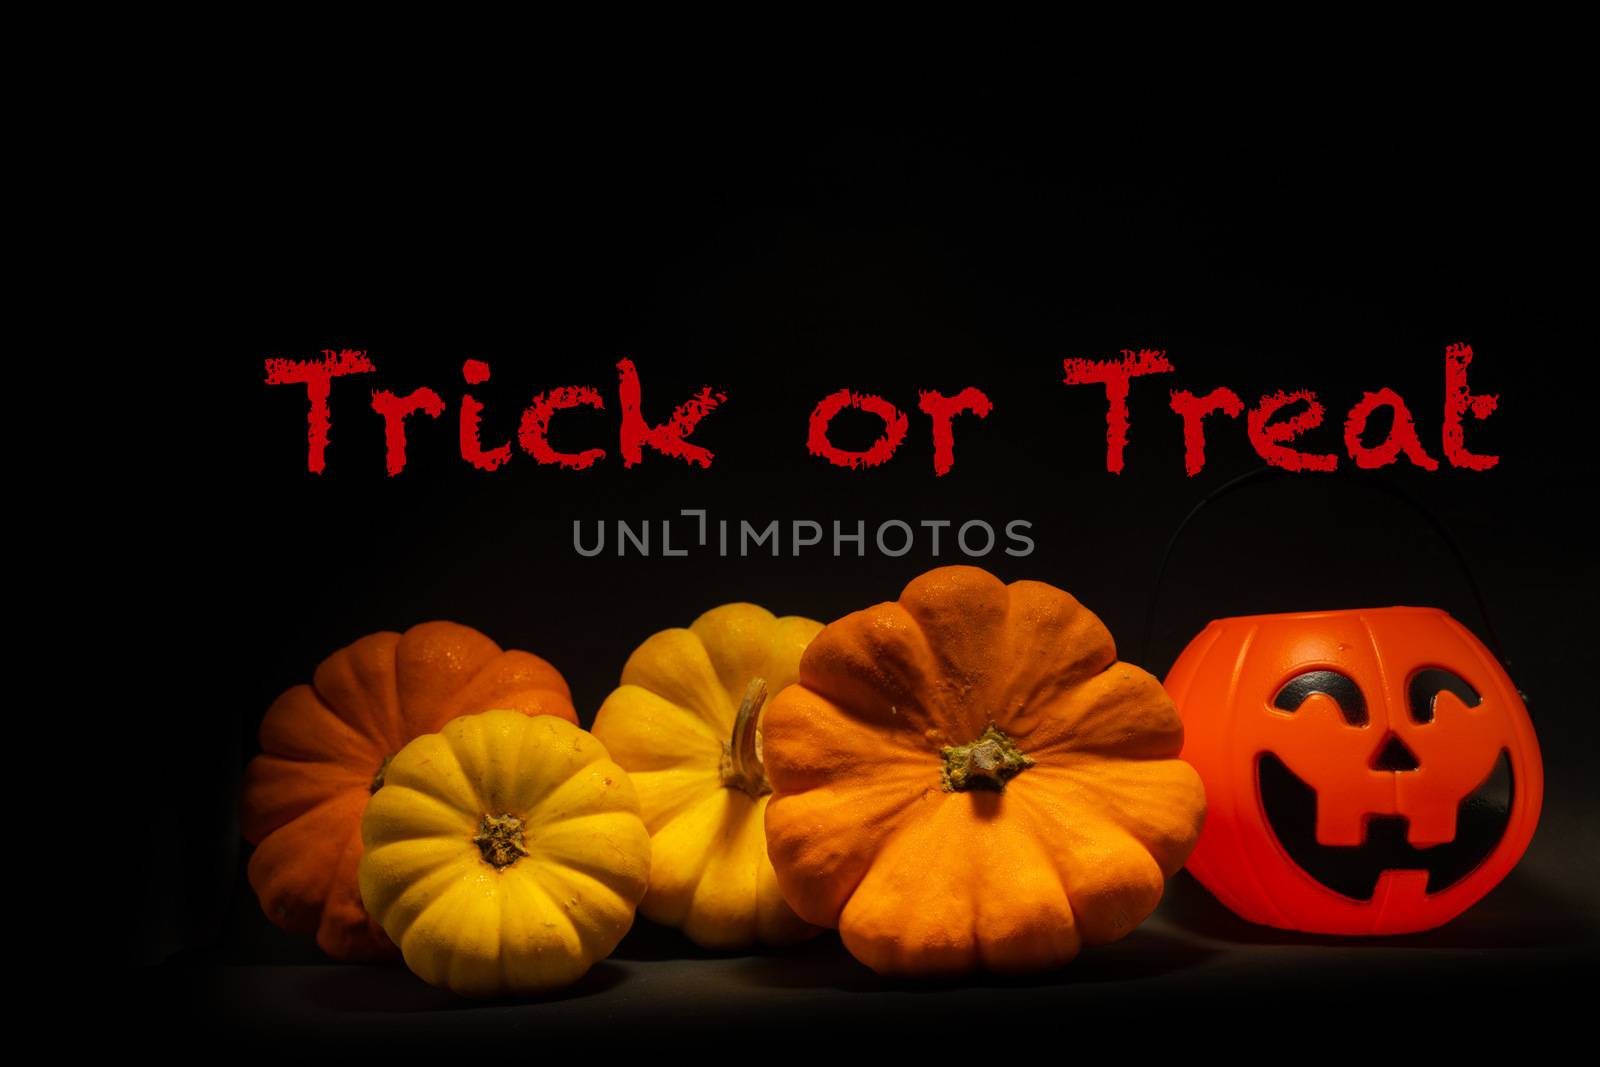 Halloween pumpkin on dark background with Trick or Treat text by peerapixs